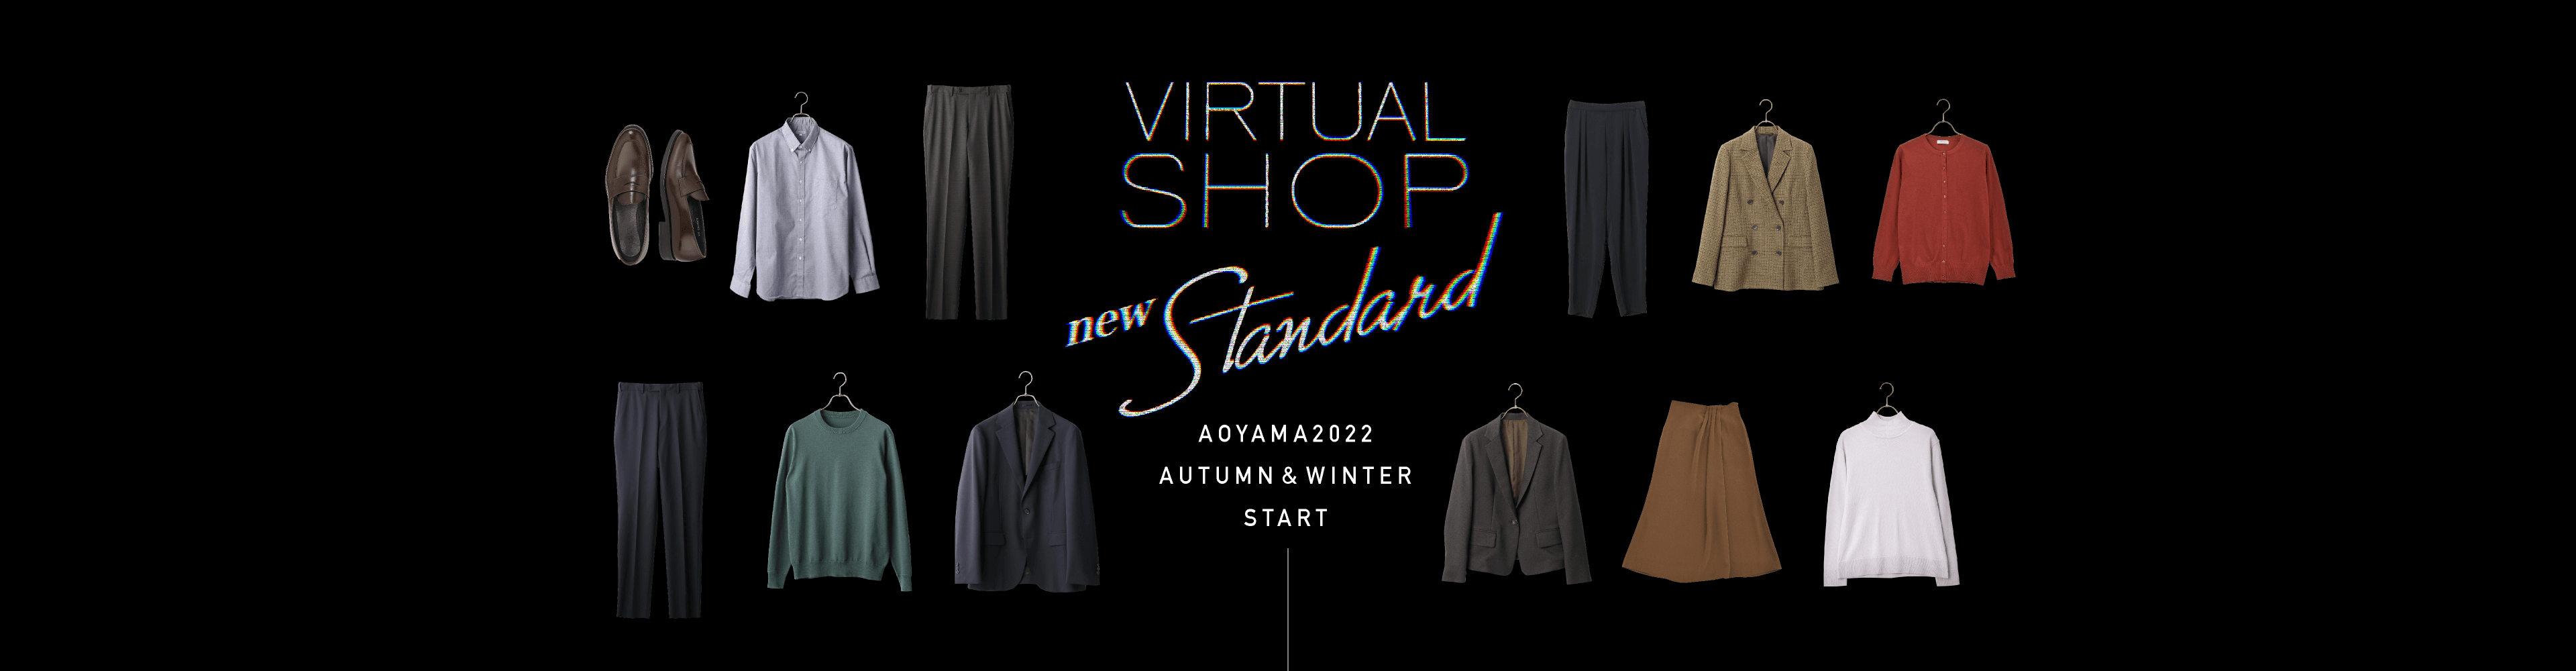 VIRTUAL SHOP new Standard AOYAMA2022 AUTUMN & WINTER START